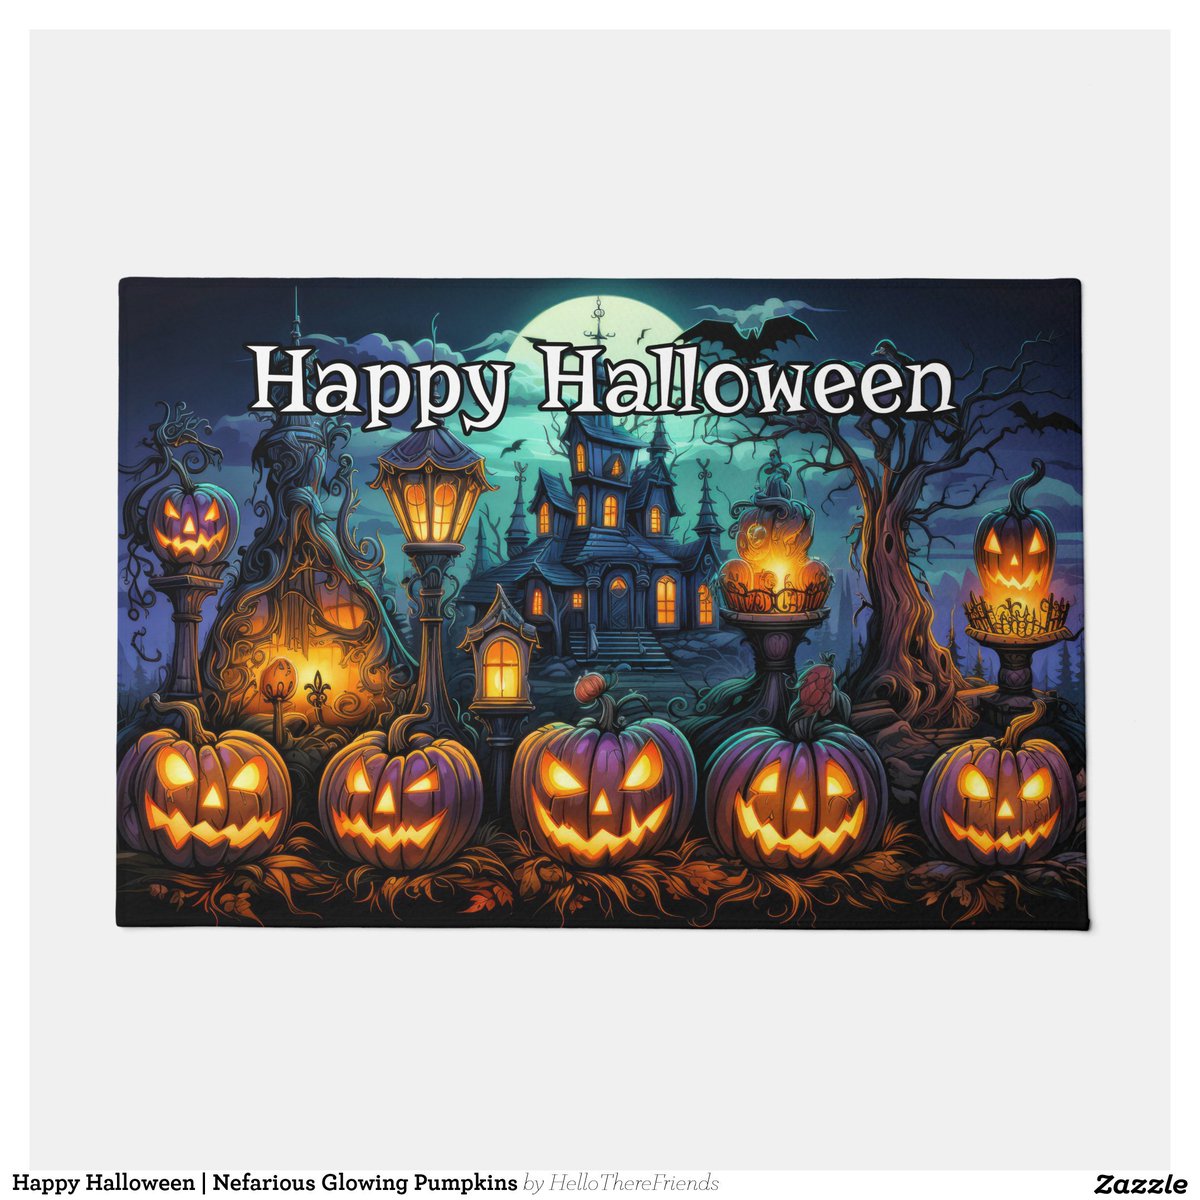 Happy Halloween | Nefarious Glowing Pumpkins Doormat→zazzle.com/z/a74fedgl?rf=…

#WelcomeMat #WelcomeDoormat #HappyHalloween #Halloween2024 #TrickOrTreat #HauntedHouse #HomeDecor #HolidayDecor #Zazzlemade